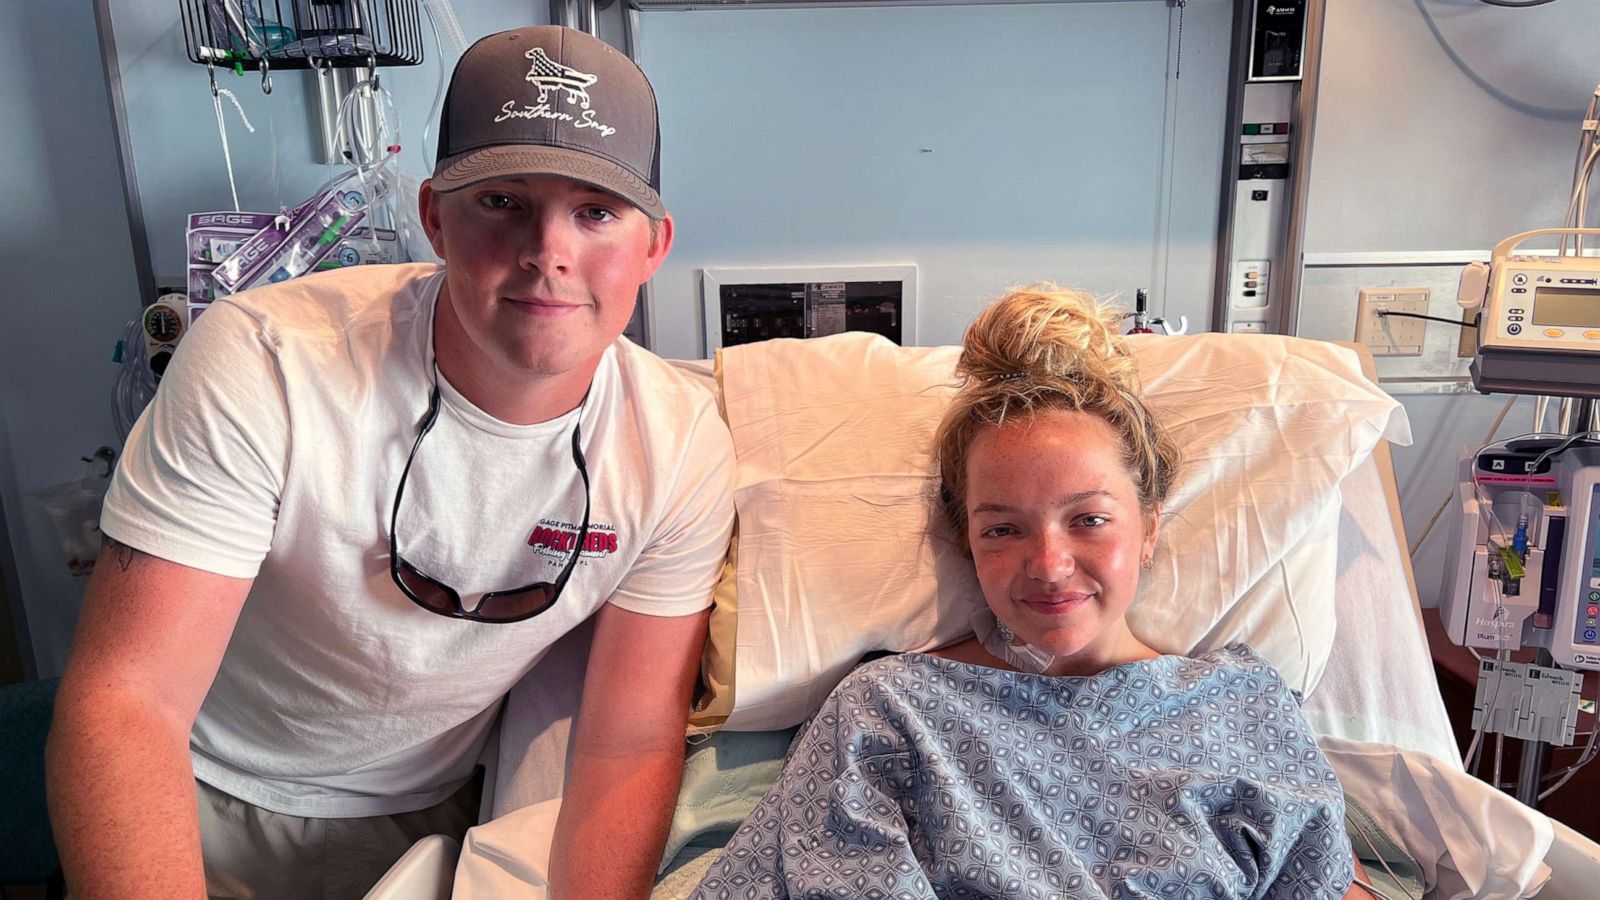 Girl hit by baseball has surgery 